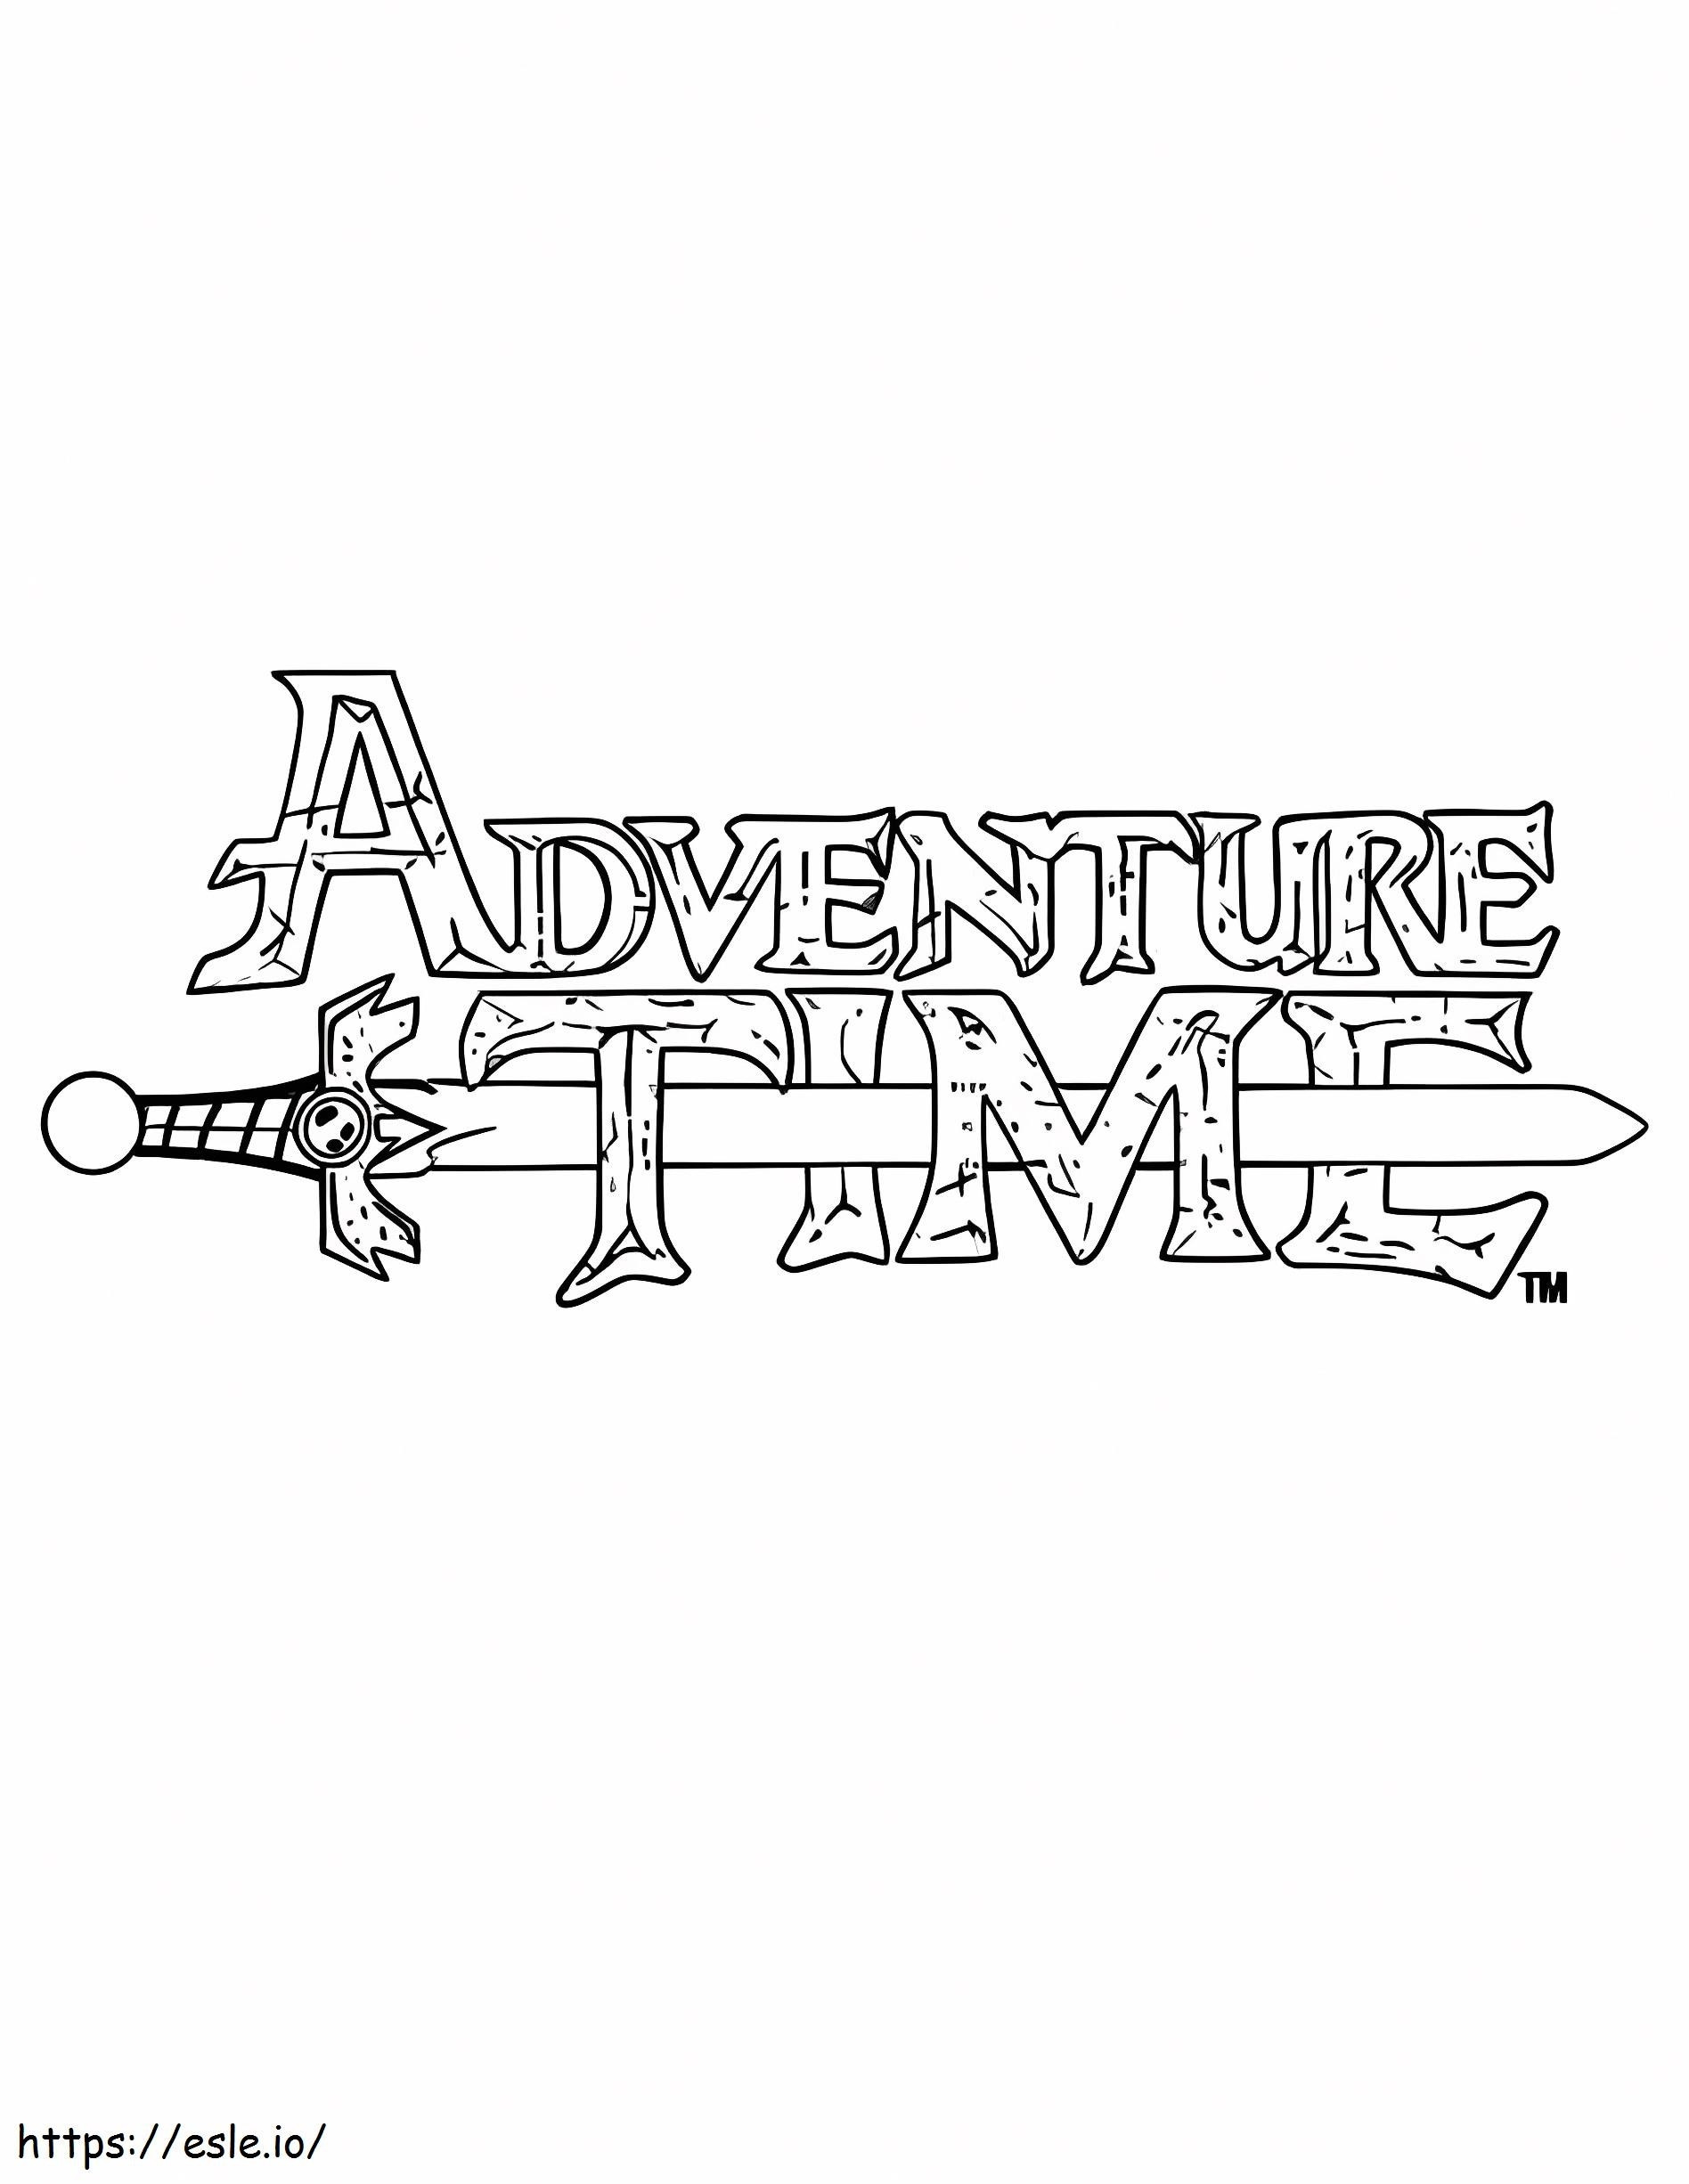 Adventure Time-logo kleurplaat kleurplaat